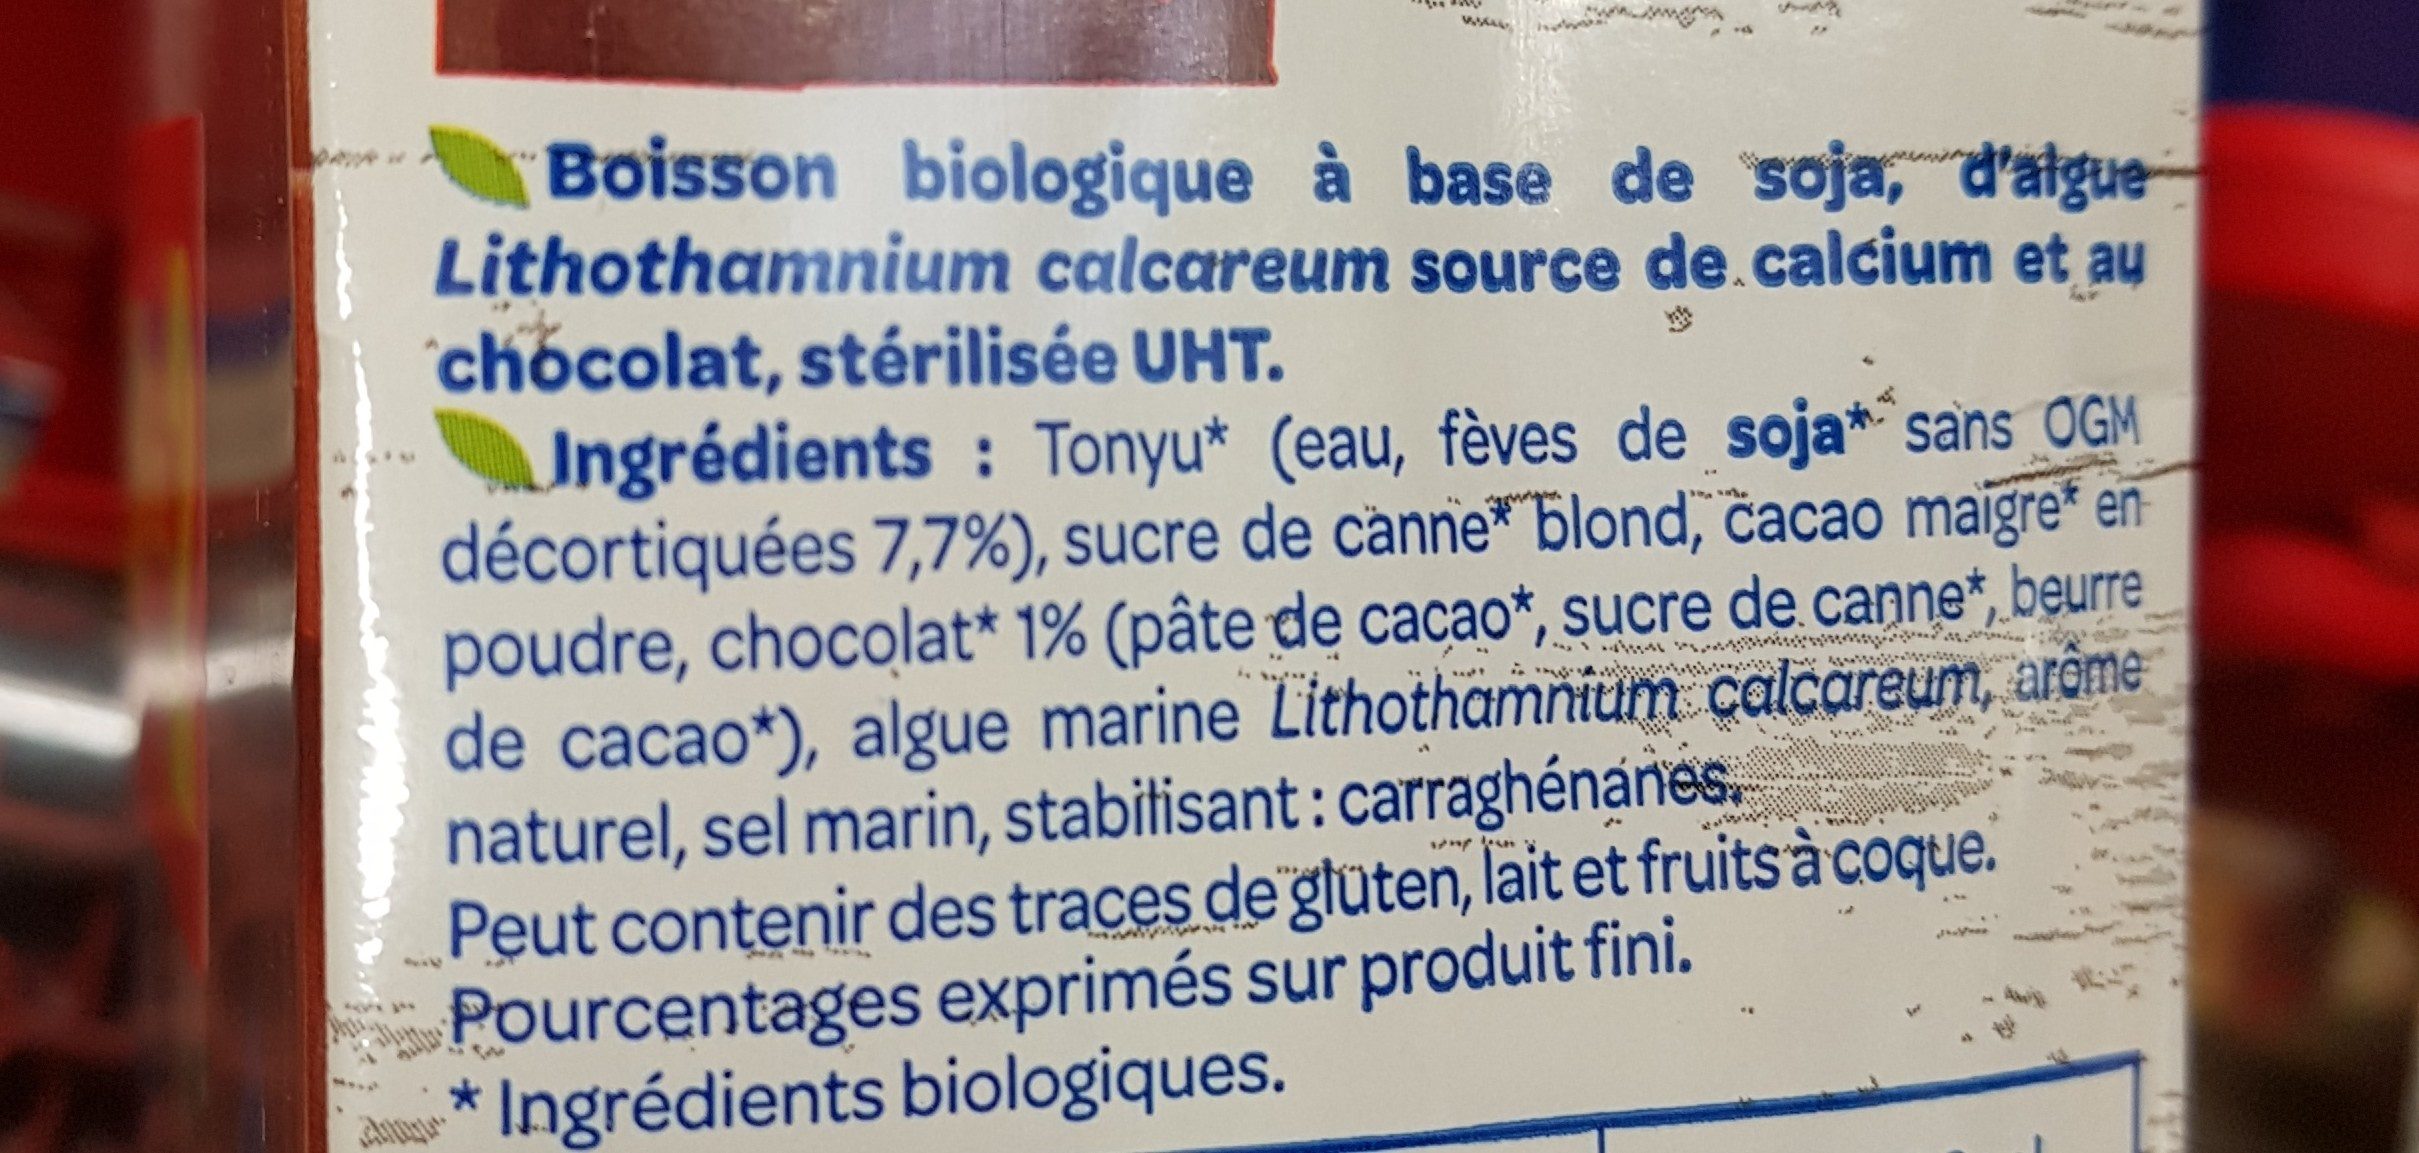 Soja chocolat calcium - Ingredienser - fr